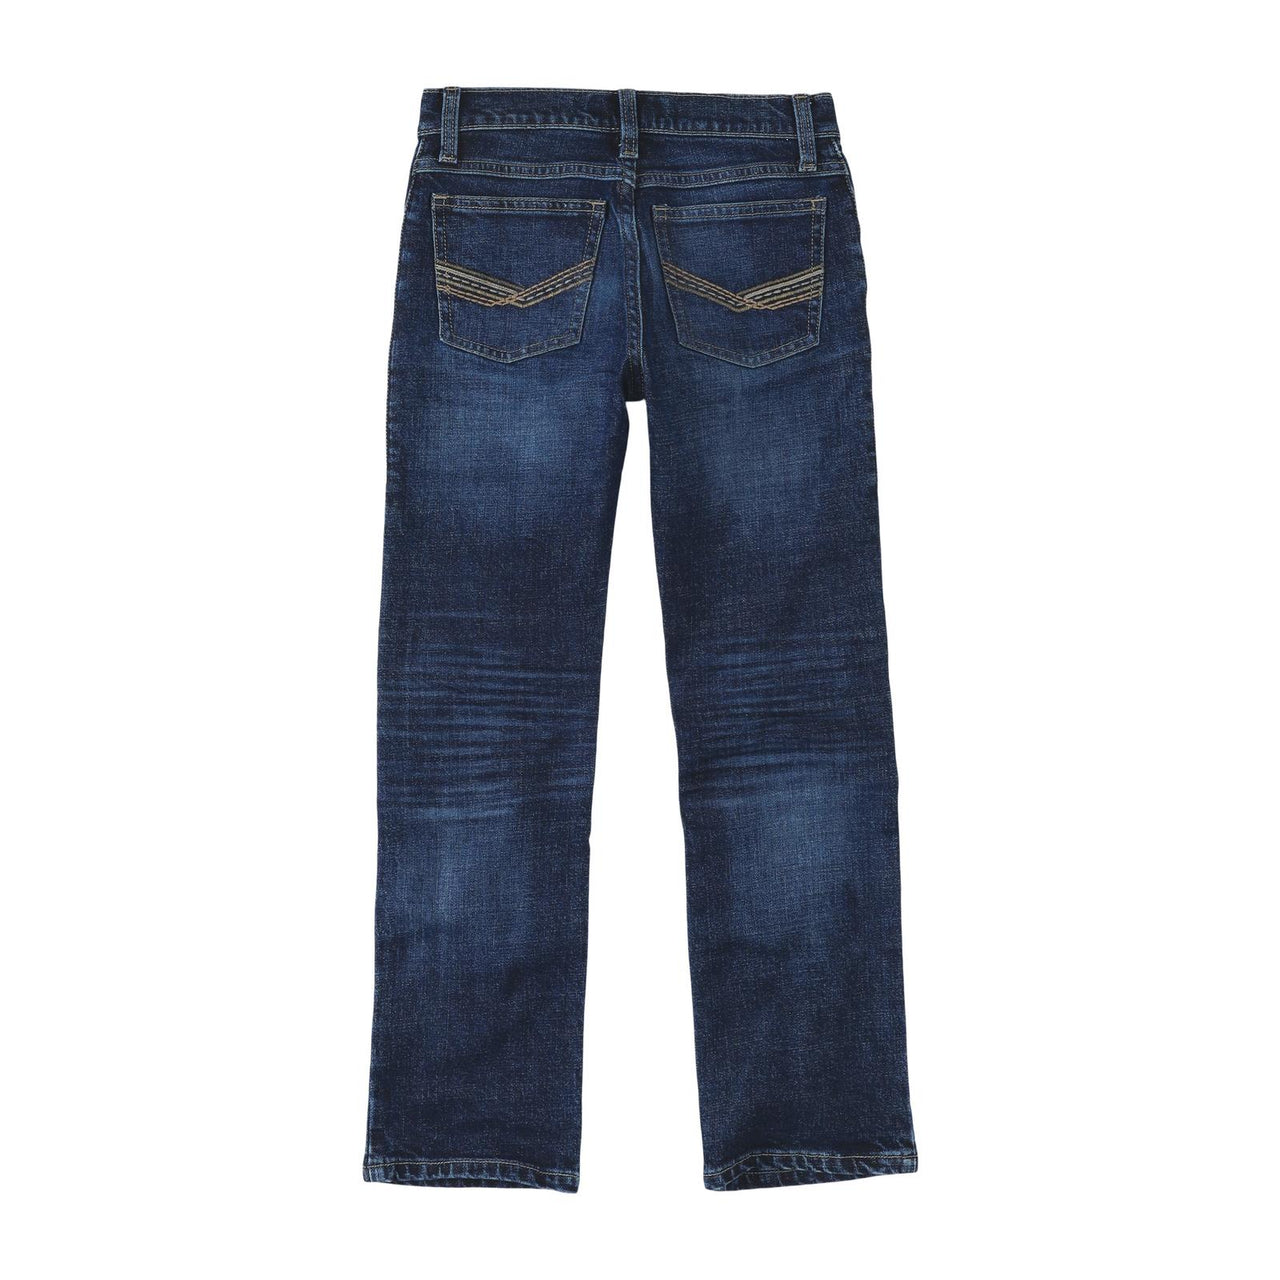 Wrangler Boys 20X Slim Straight Jeans (8-20) - Blueberry Gardens